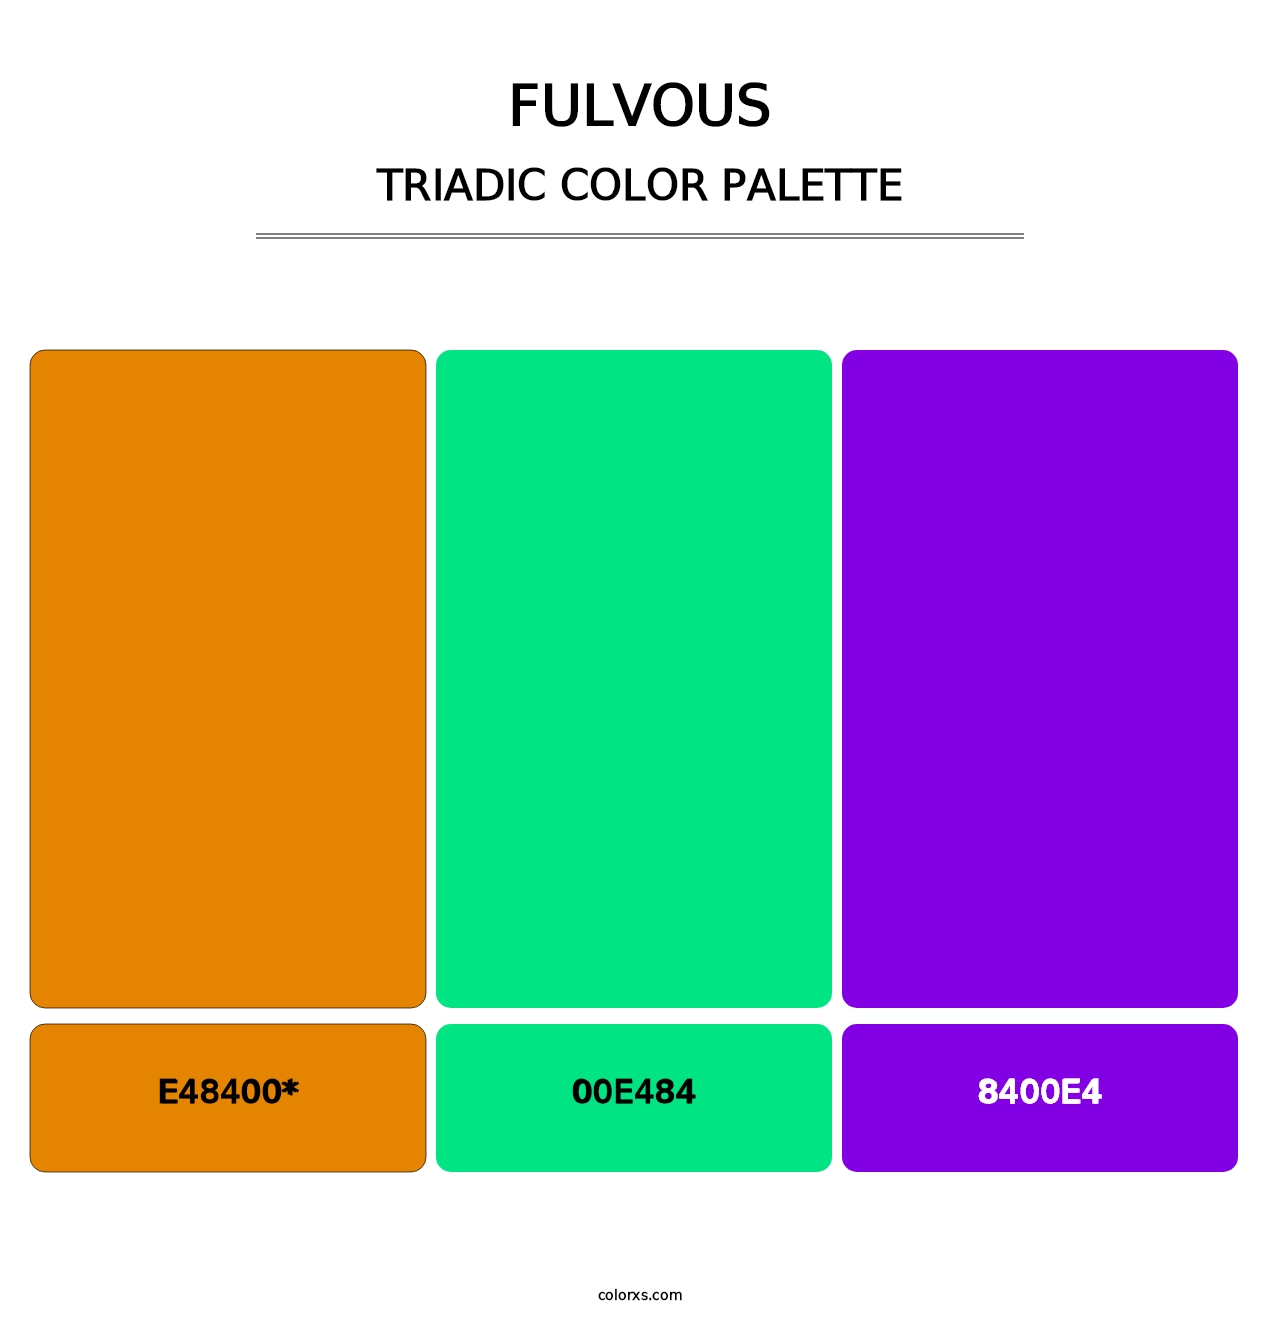 Fulvous - Triadic Color Palette